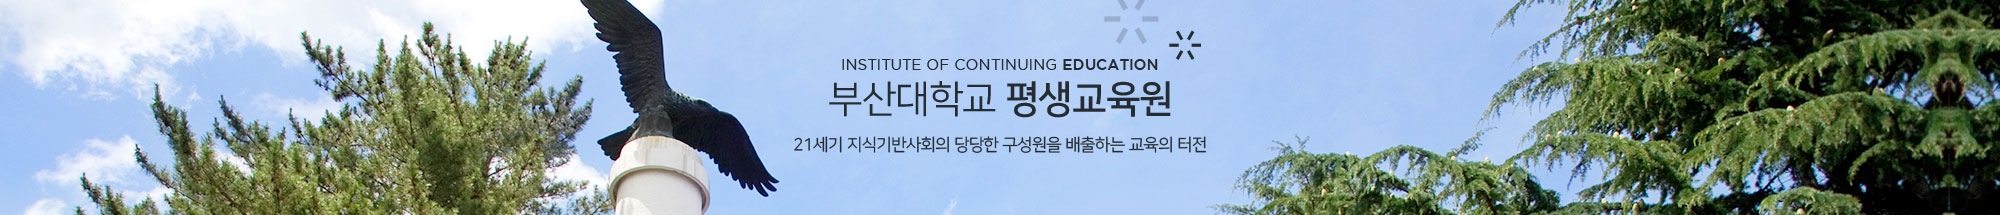 INSTITUTE OF EDUCATION 부산대학교 평생교육원 21세기 지식기반사회의 당당한 구성원을 배출하는 교육의 터전